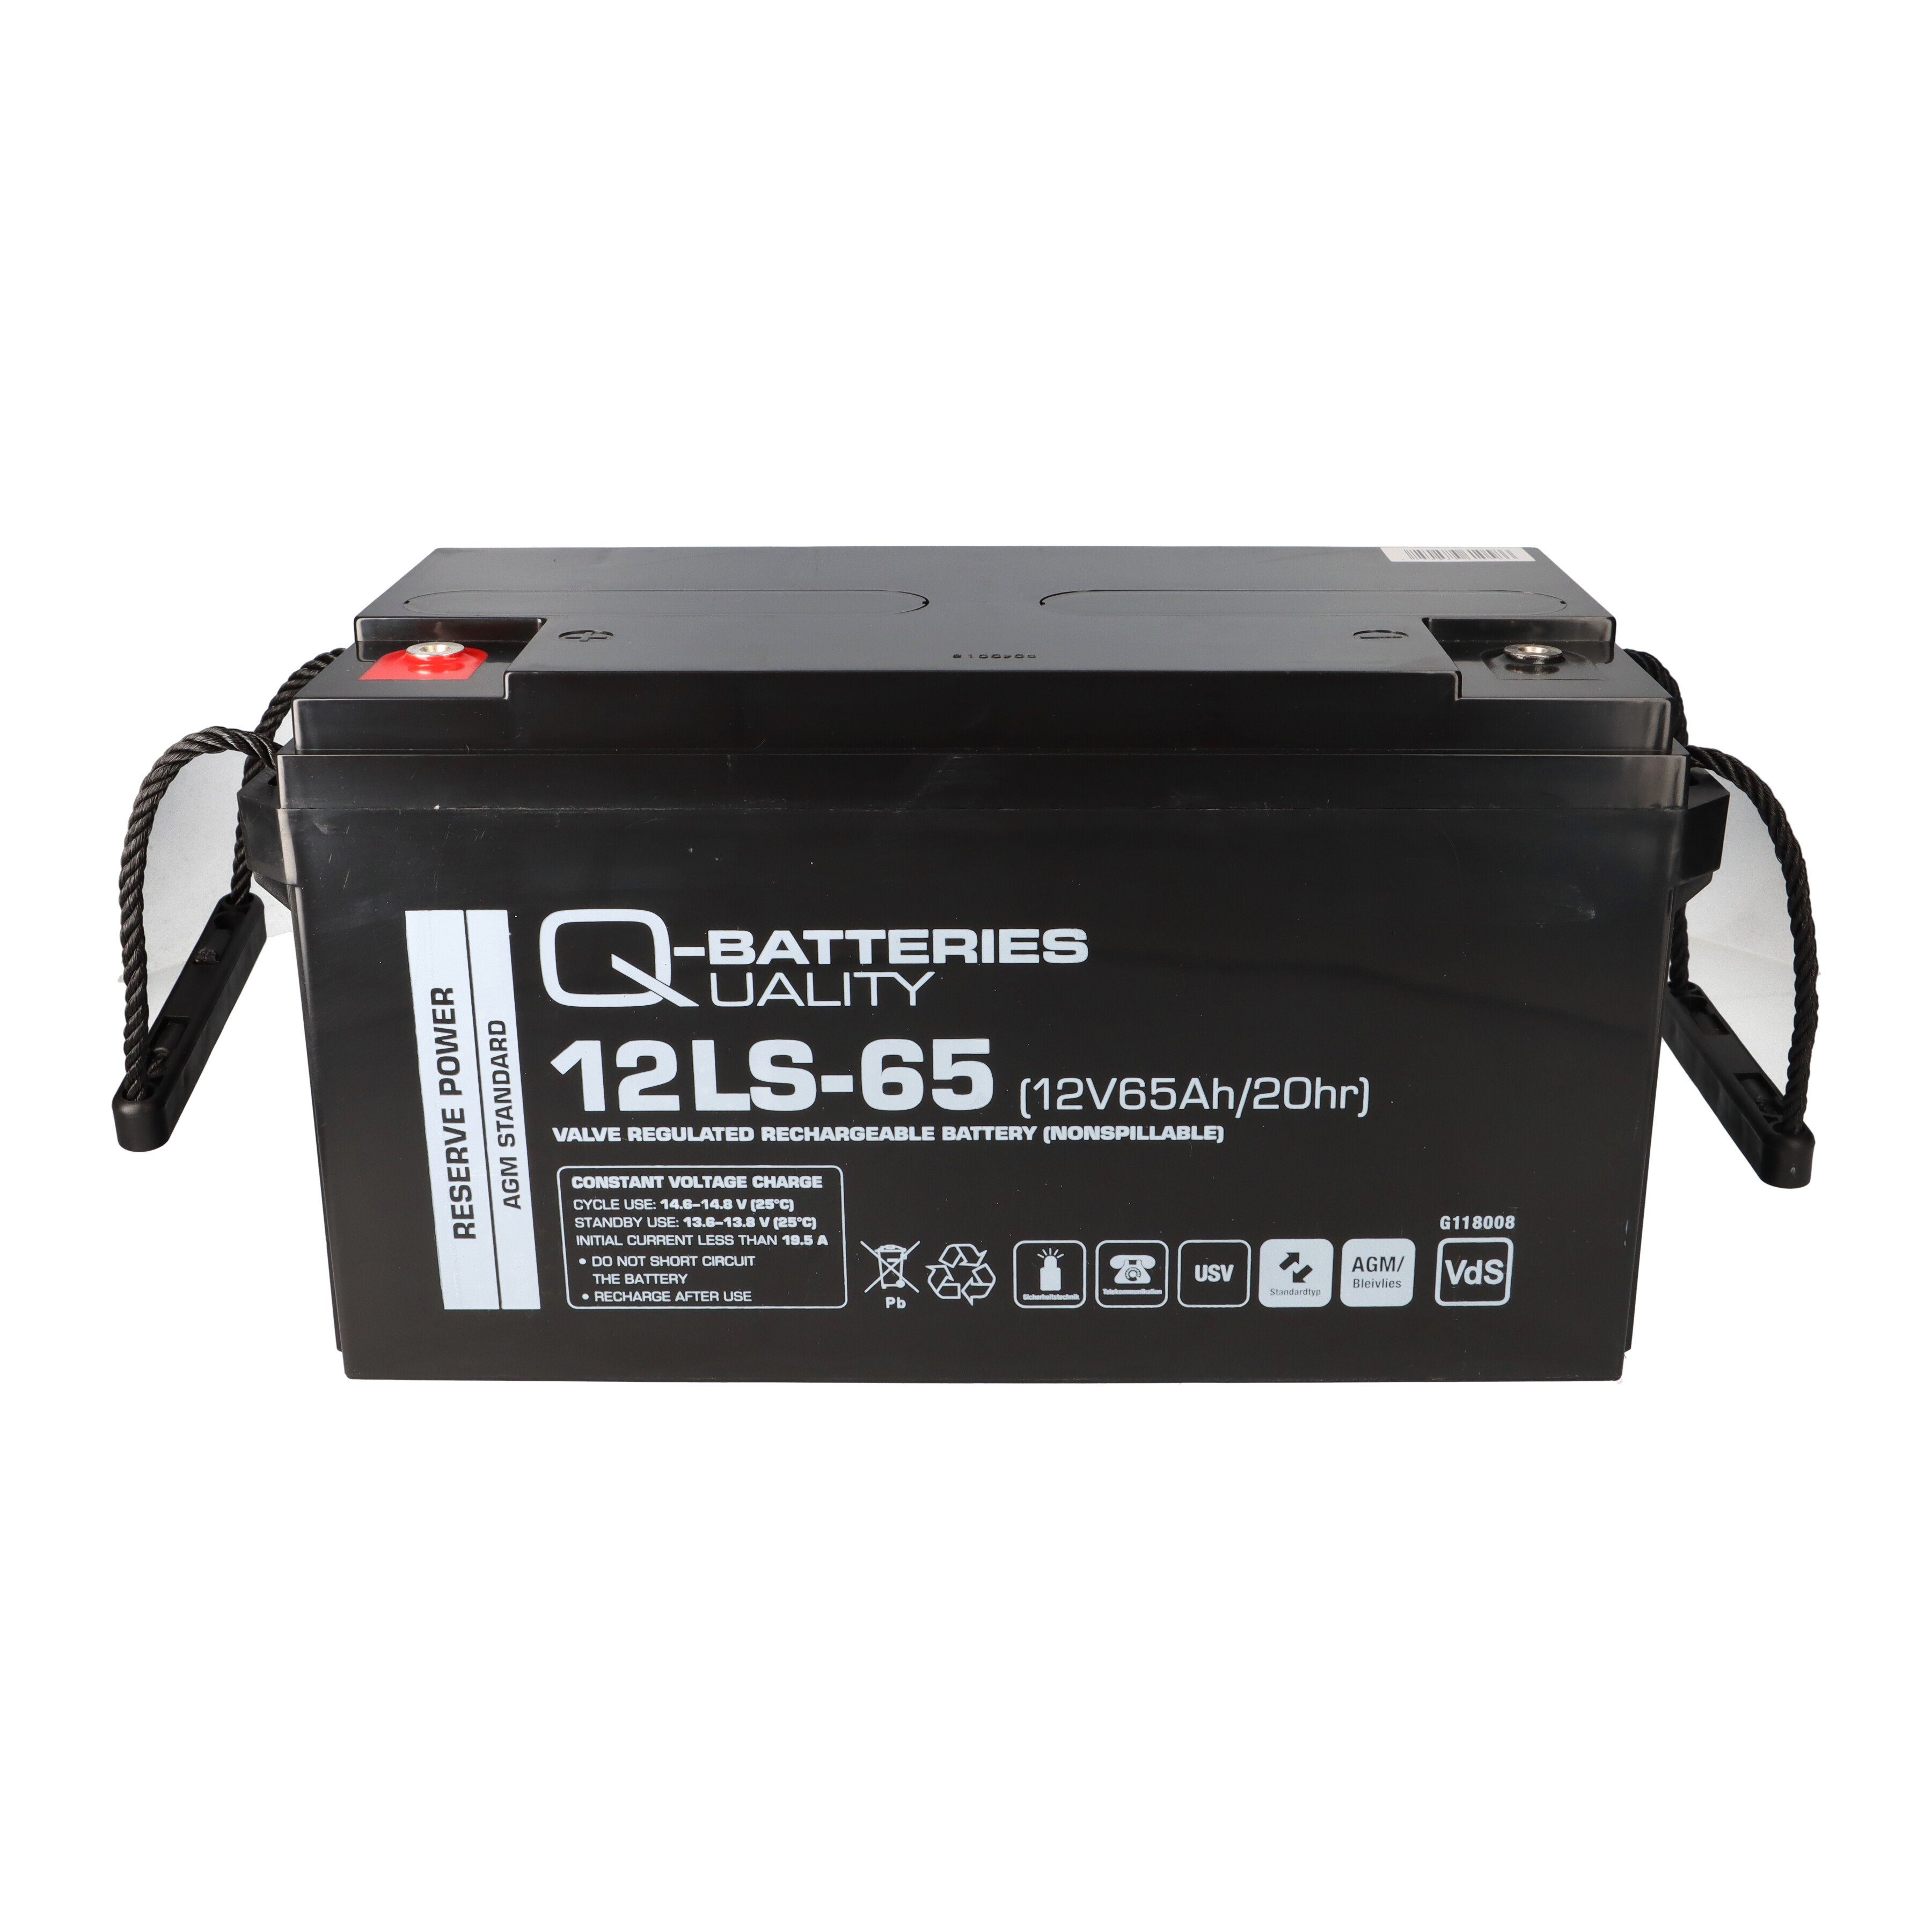 Q-Batteries / 12LS-65 65Ah Blei-Vlies-Akku VdS Bleiakkus 12V mit VRLA AGM Q-Batteries